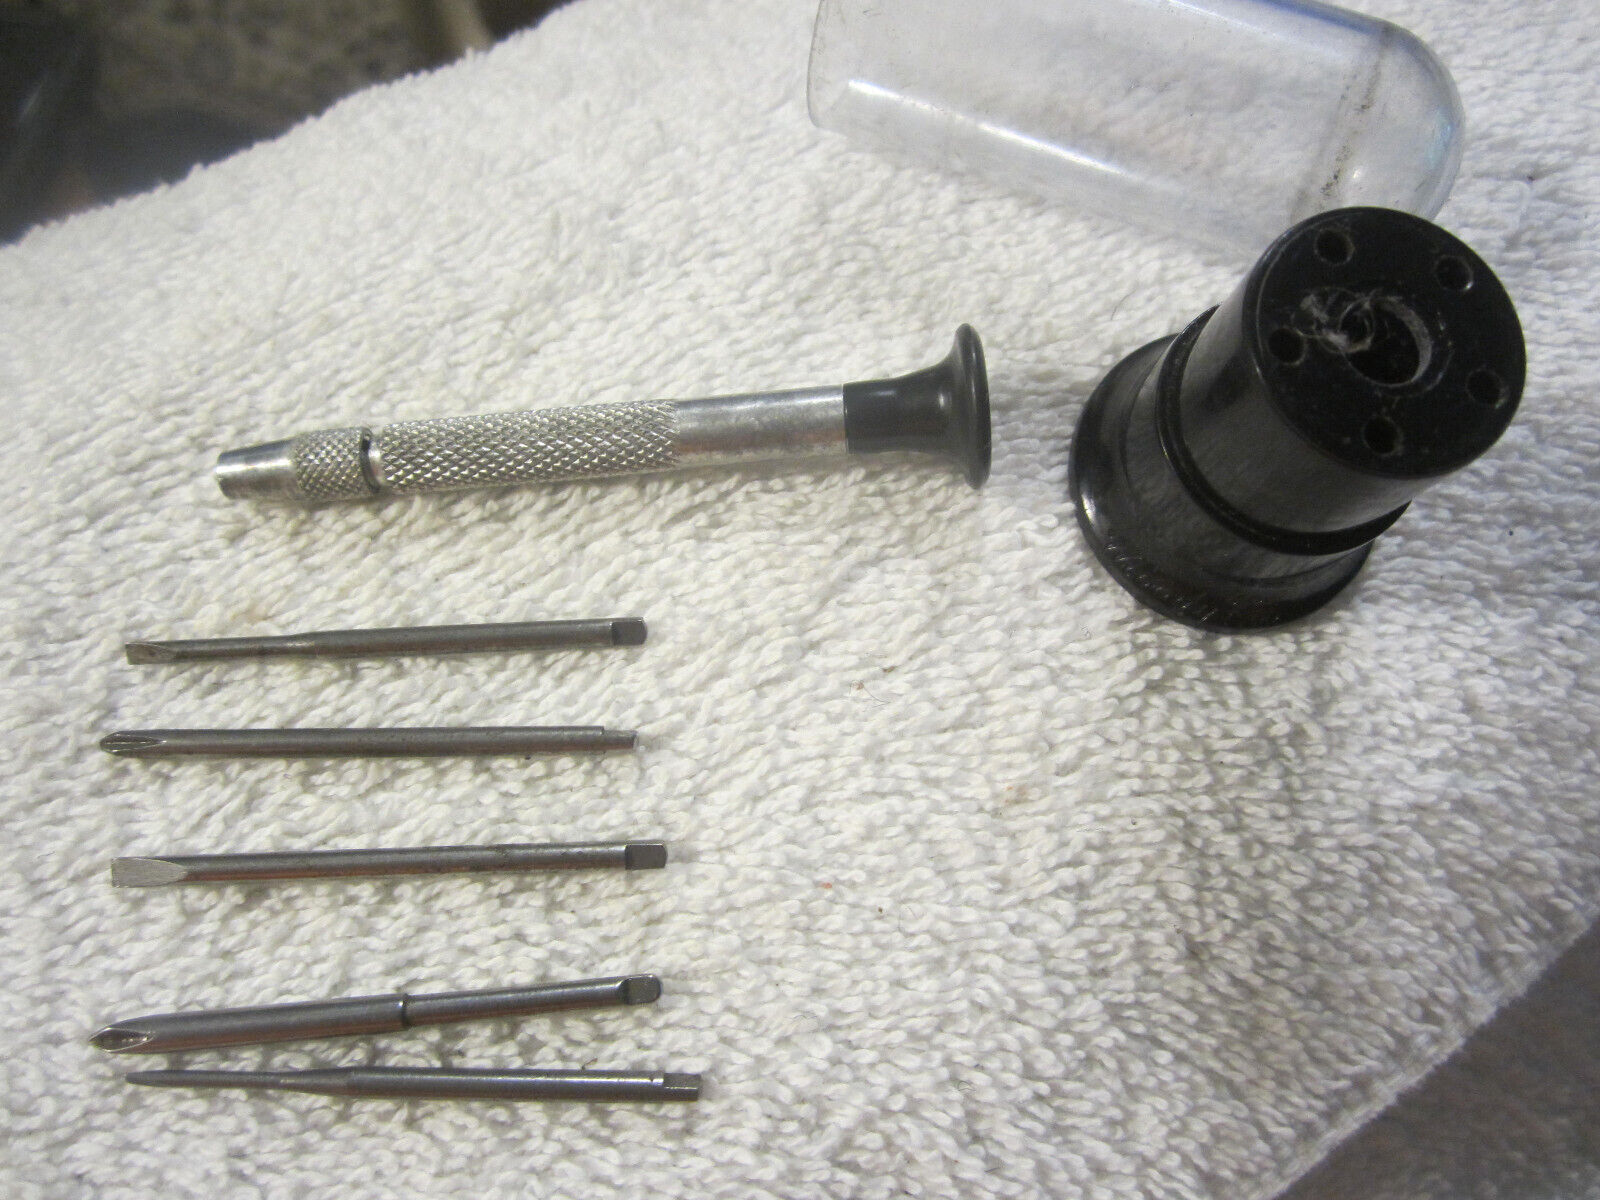 1 Moody Providence R.I ,6 piece screwdriver set with case,VTG antique,rare multi